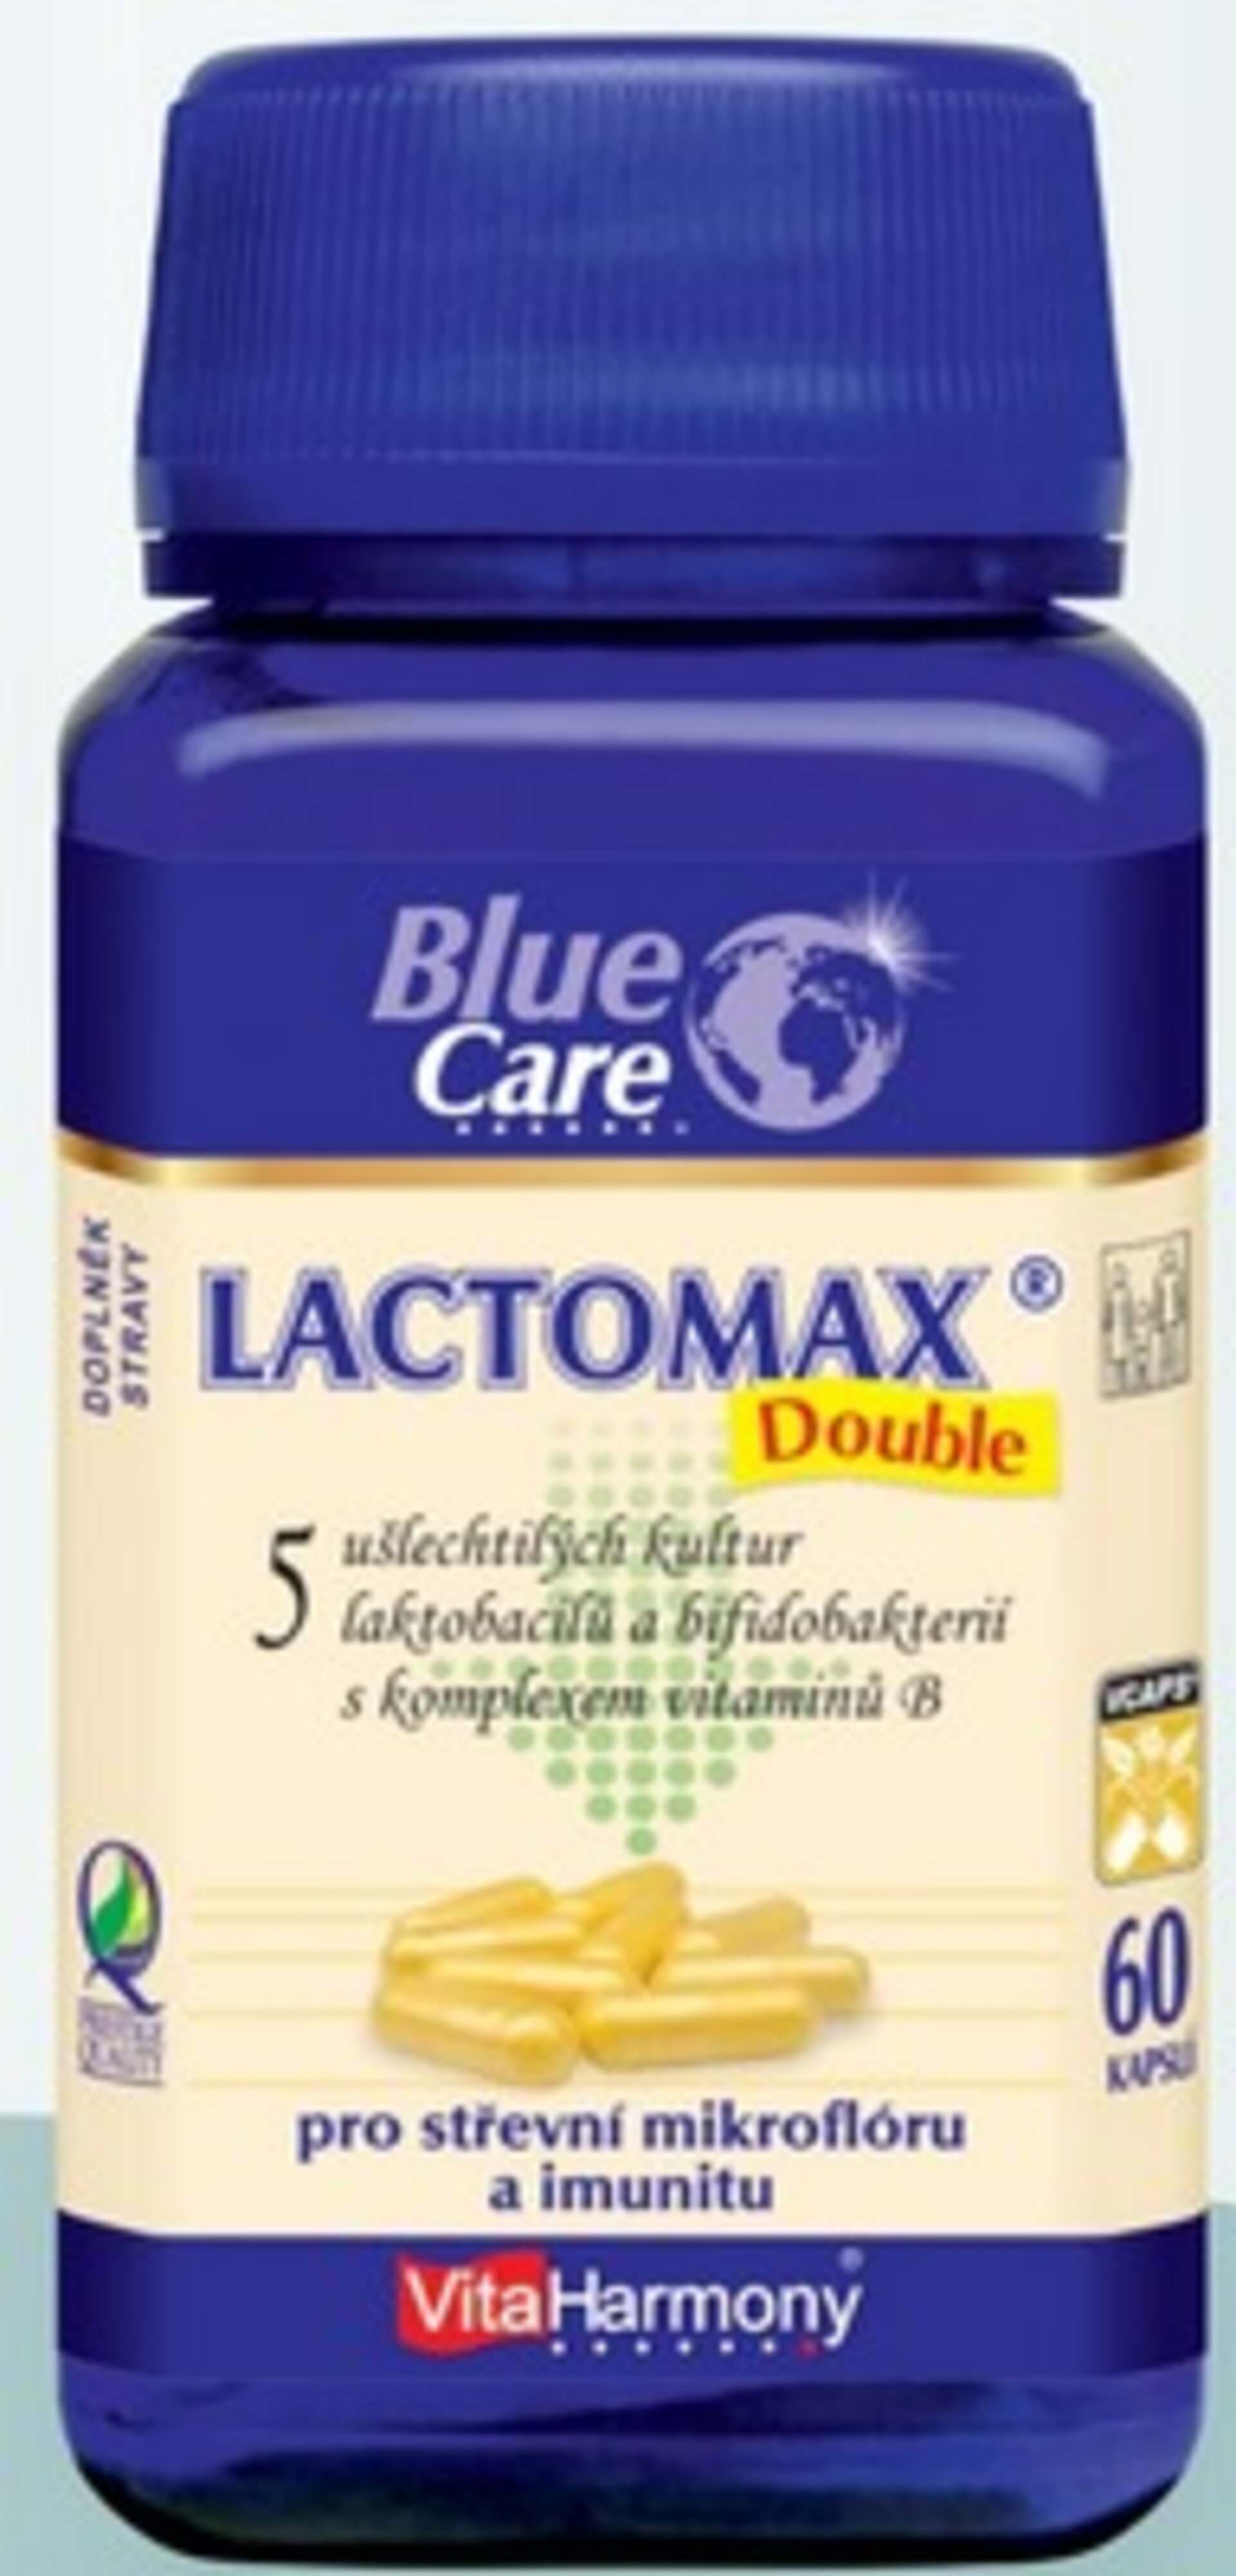 E-shop VitaHarmony Lactomax® Double - laktobacily 4 mld. + Komplex vit. B 60 kapslí